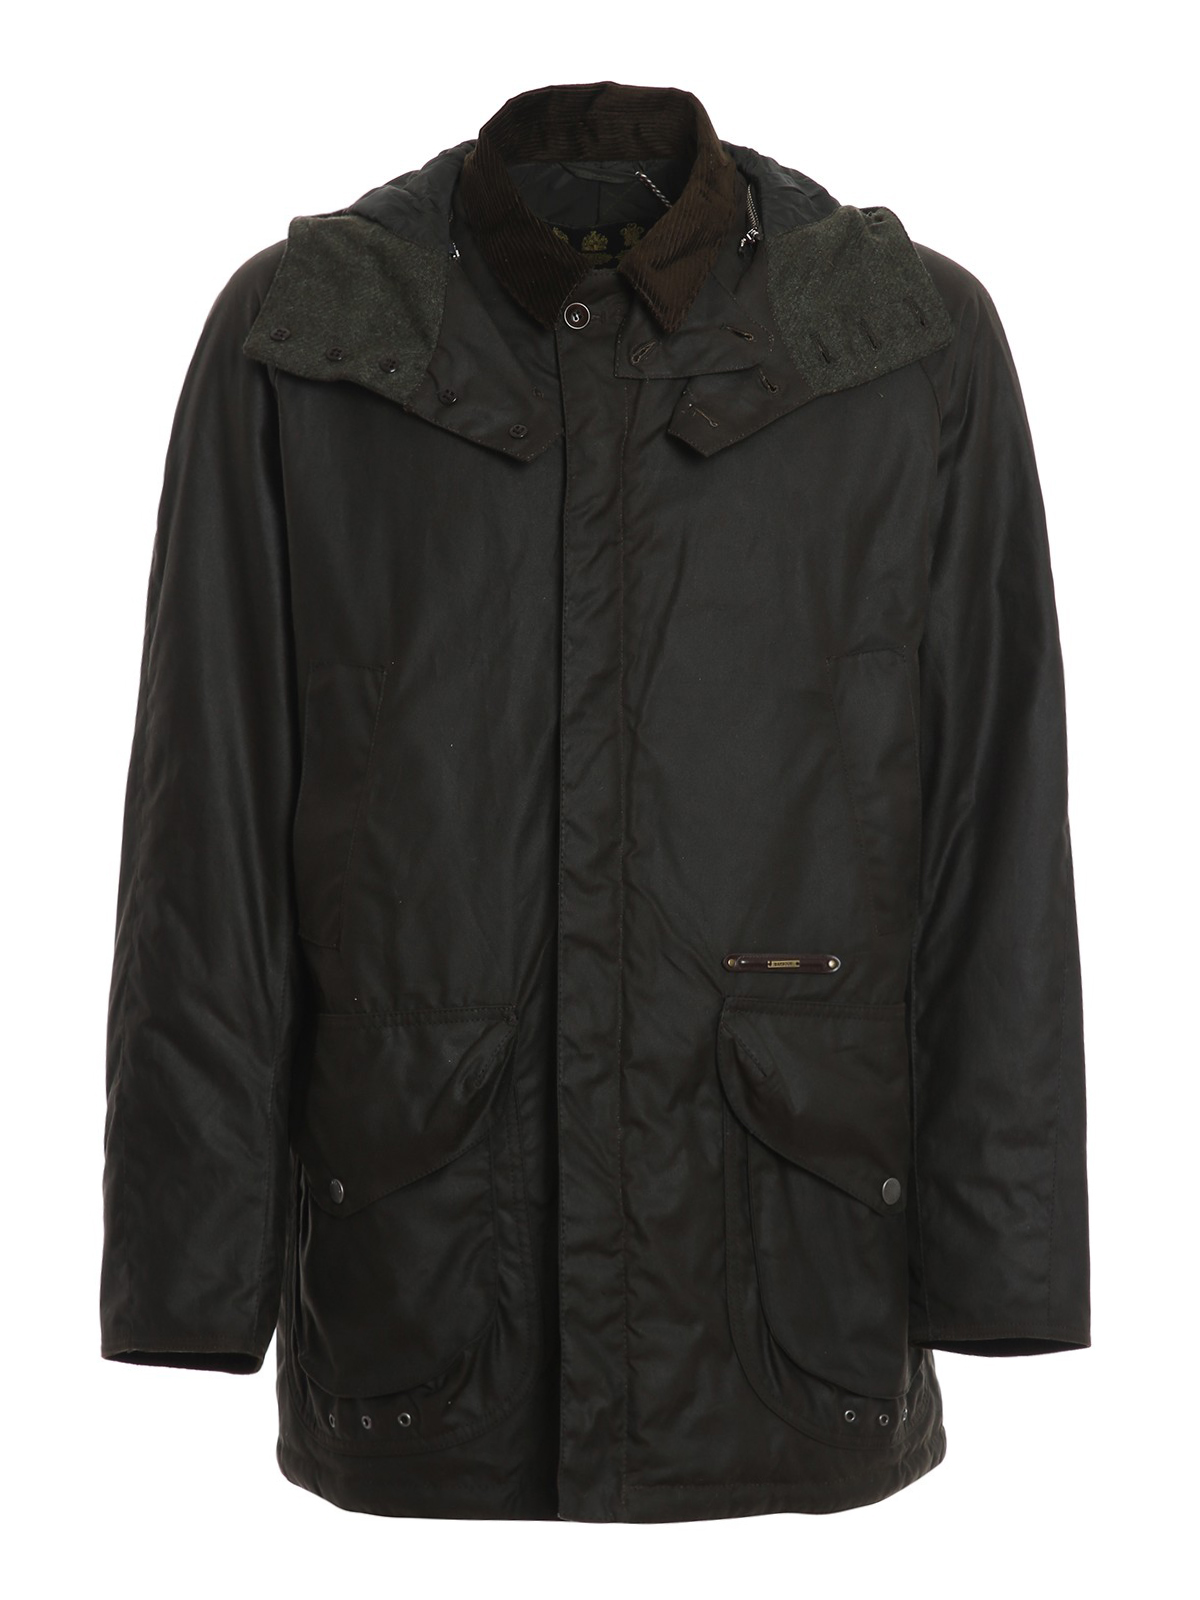 Barbour - Supa Beaufort jacket - padded jackets - MWX1691OL71 | iKRIX.com